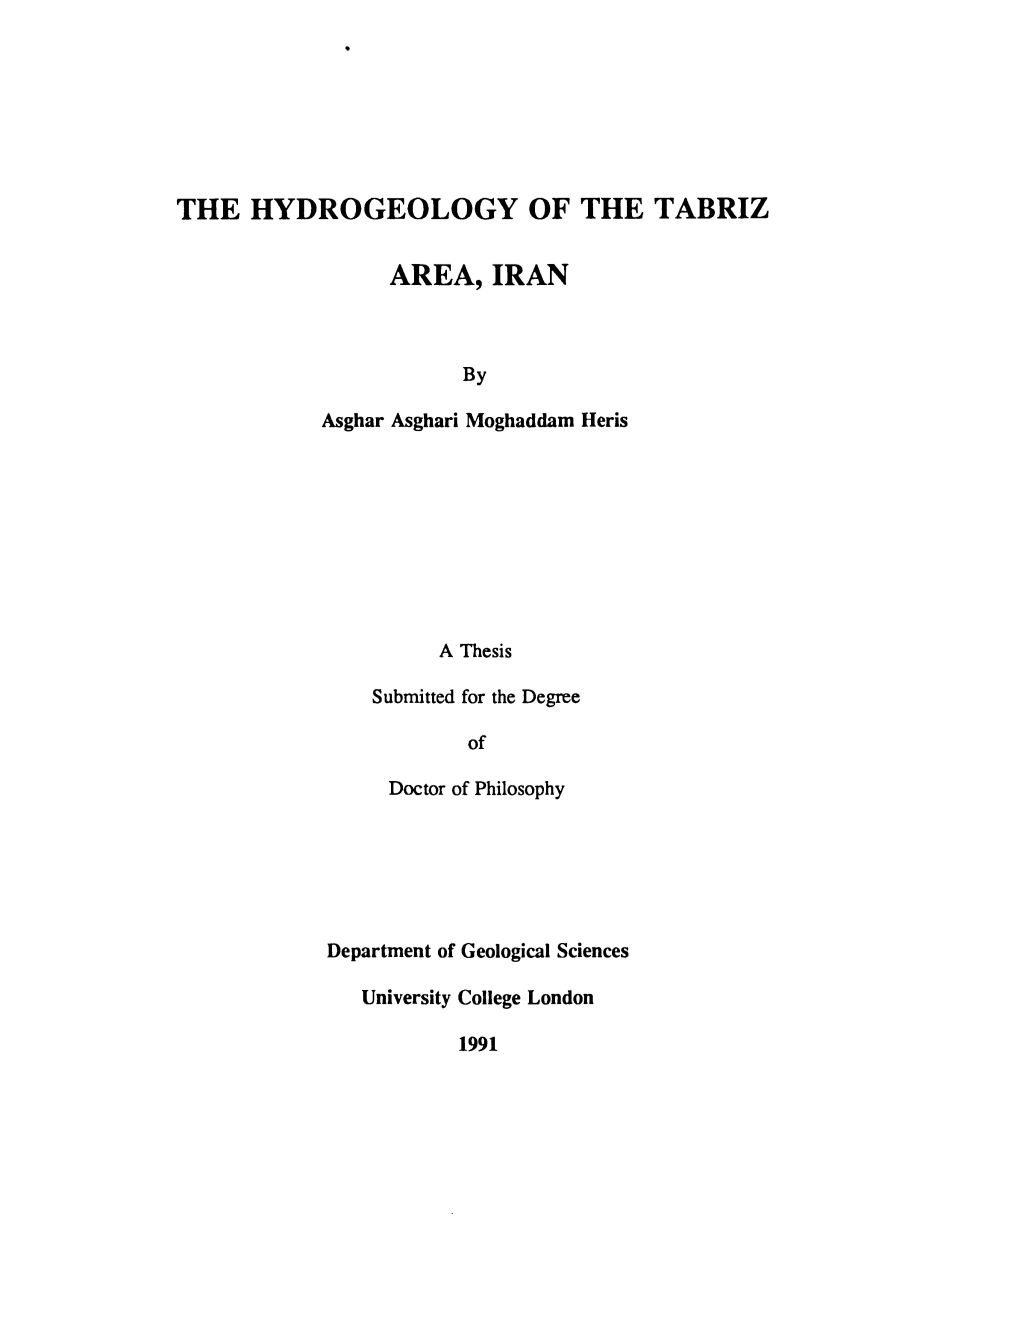 The Hydrogeology of the Tabriz Area, Iran